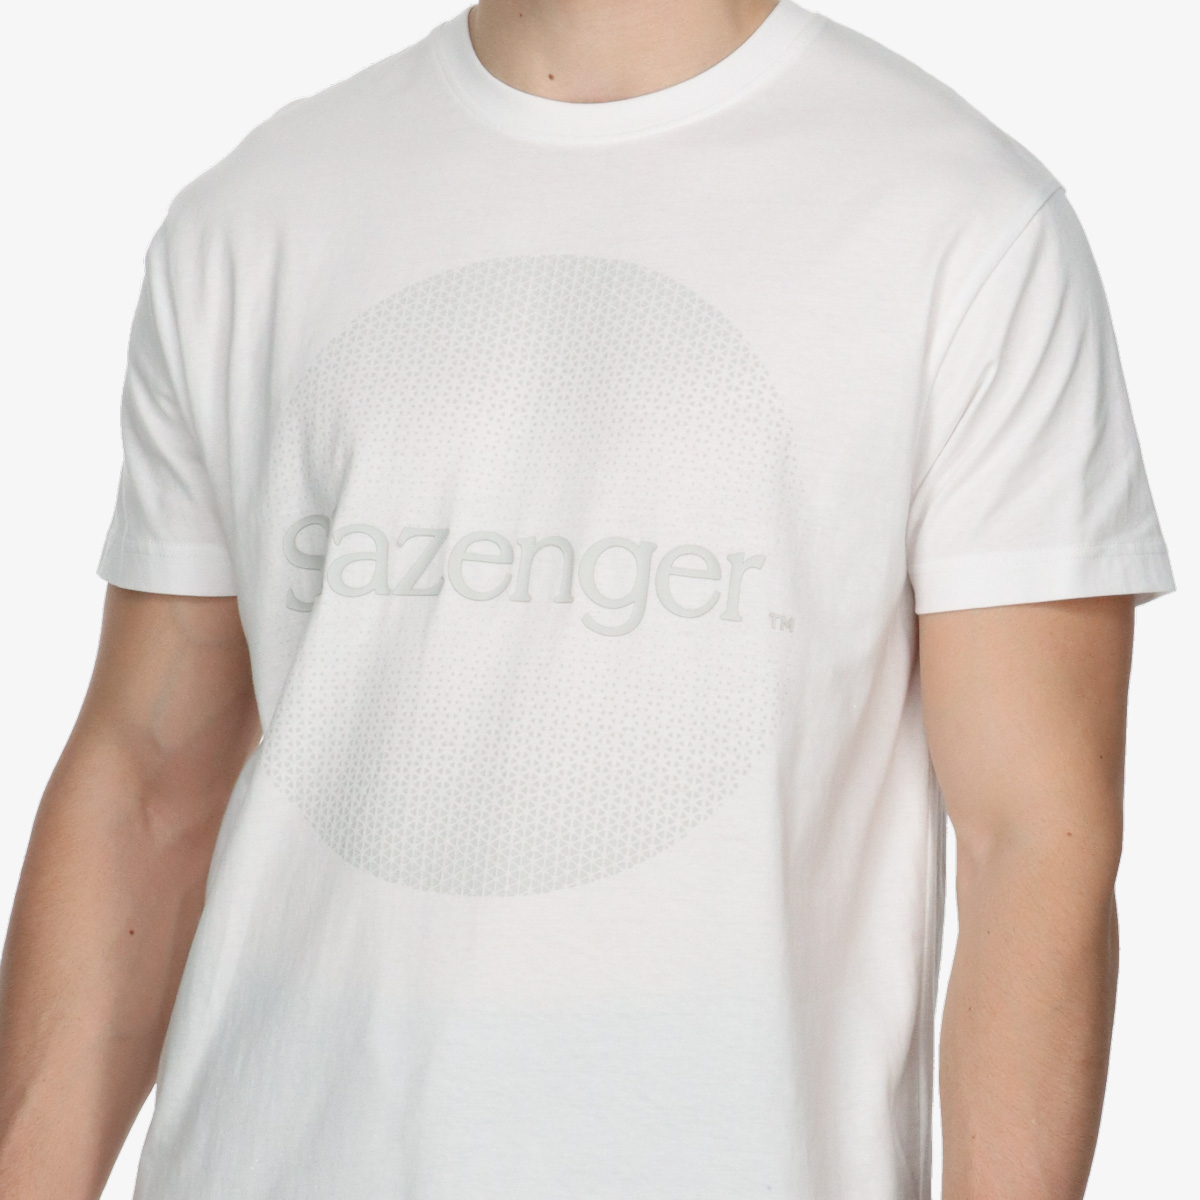 Slazenger Bluzë Circle T-Shirt 